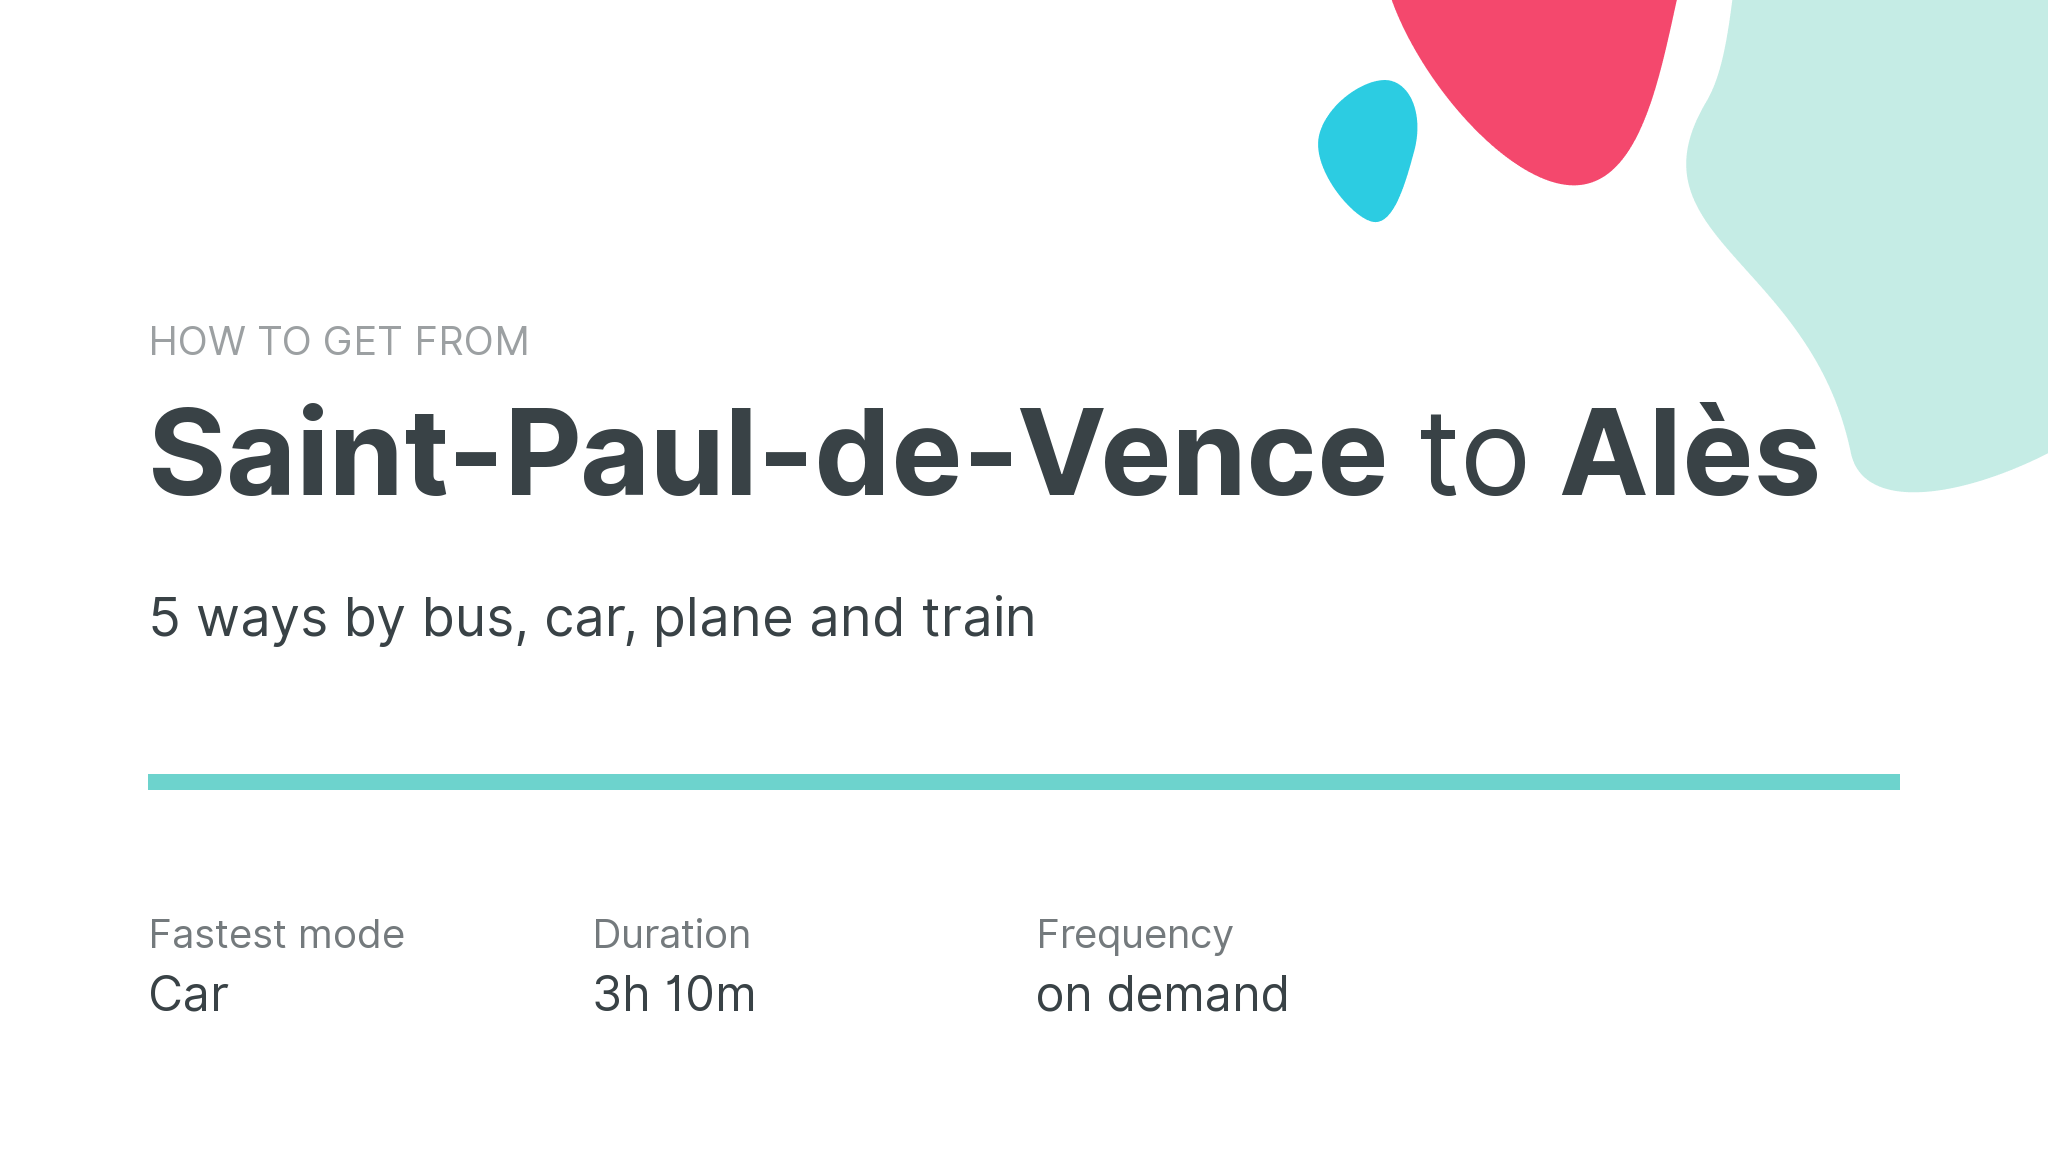 How do I get from Saint-Paul-de-Vence to Alès